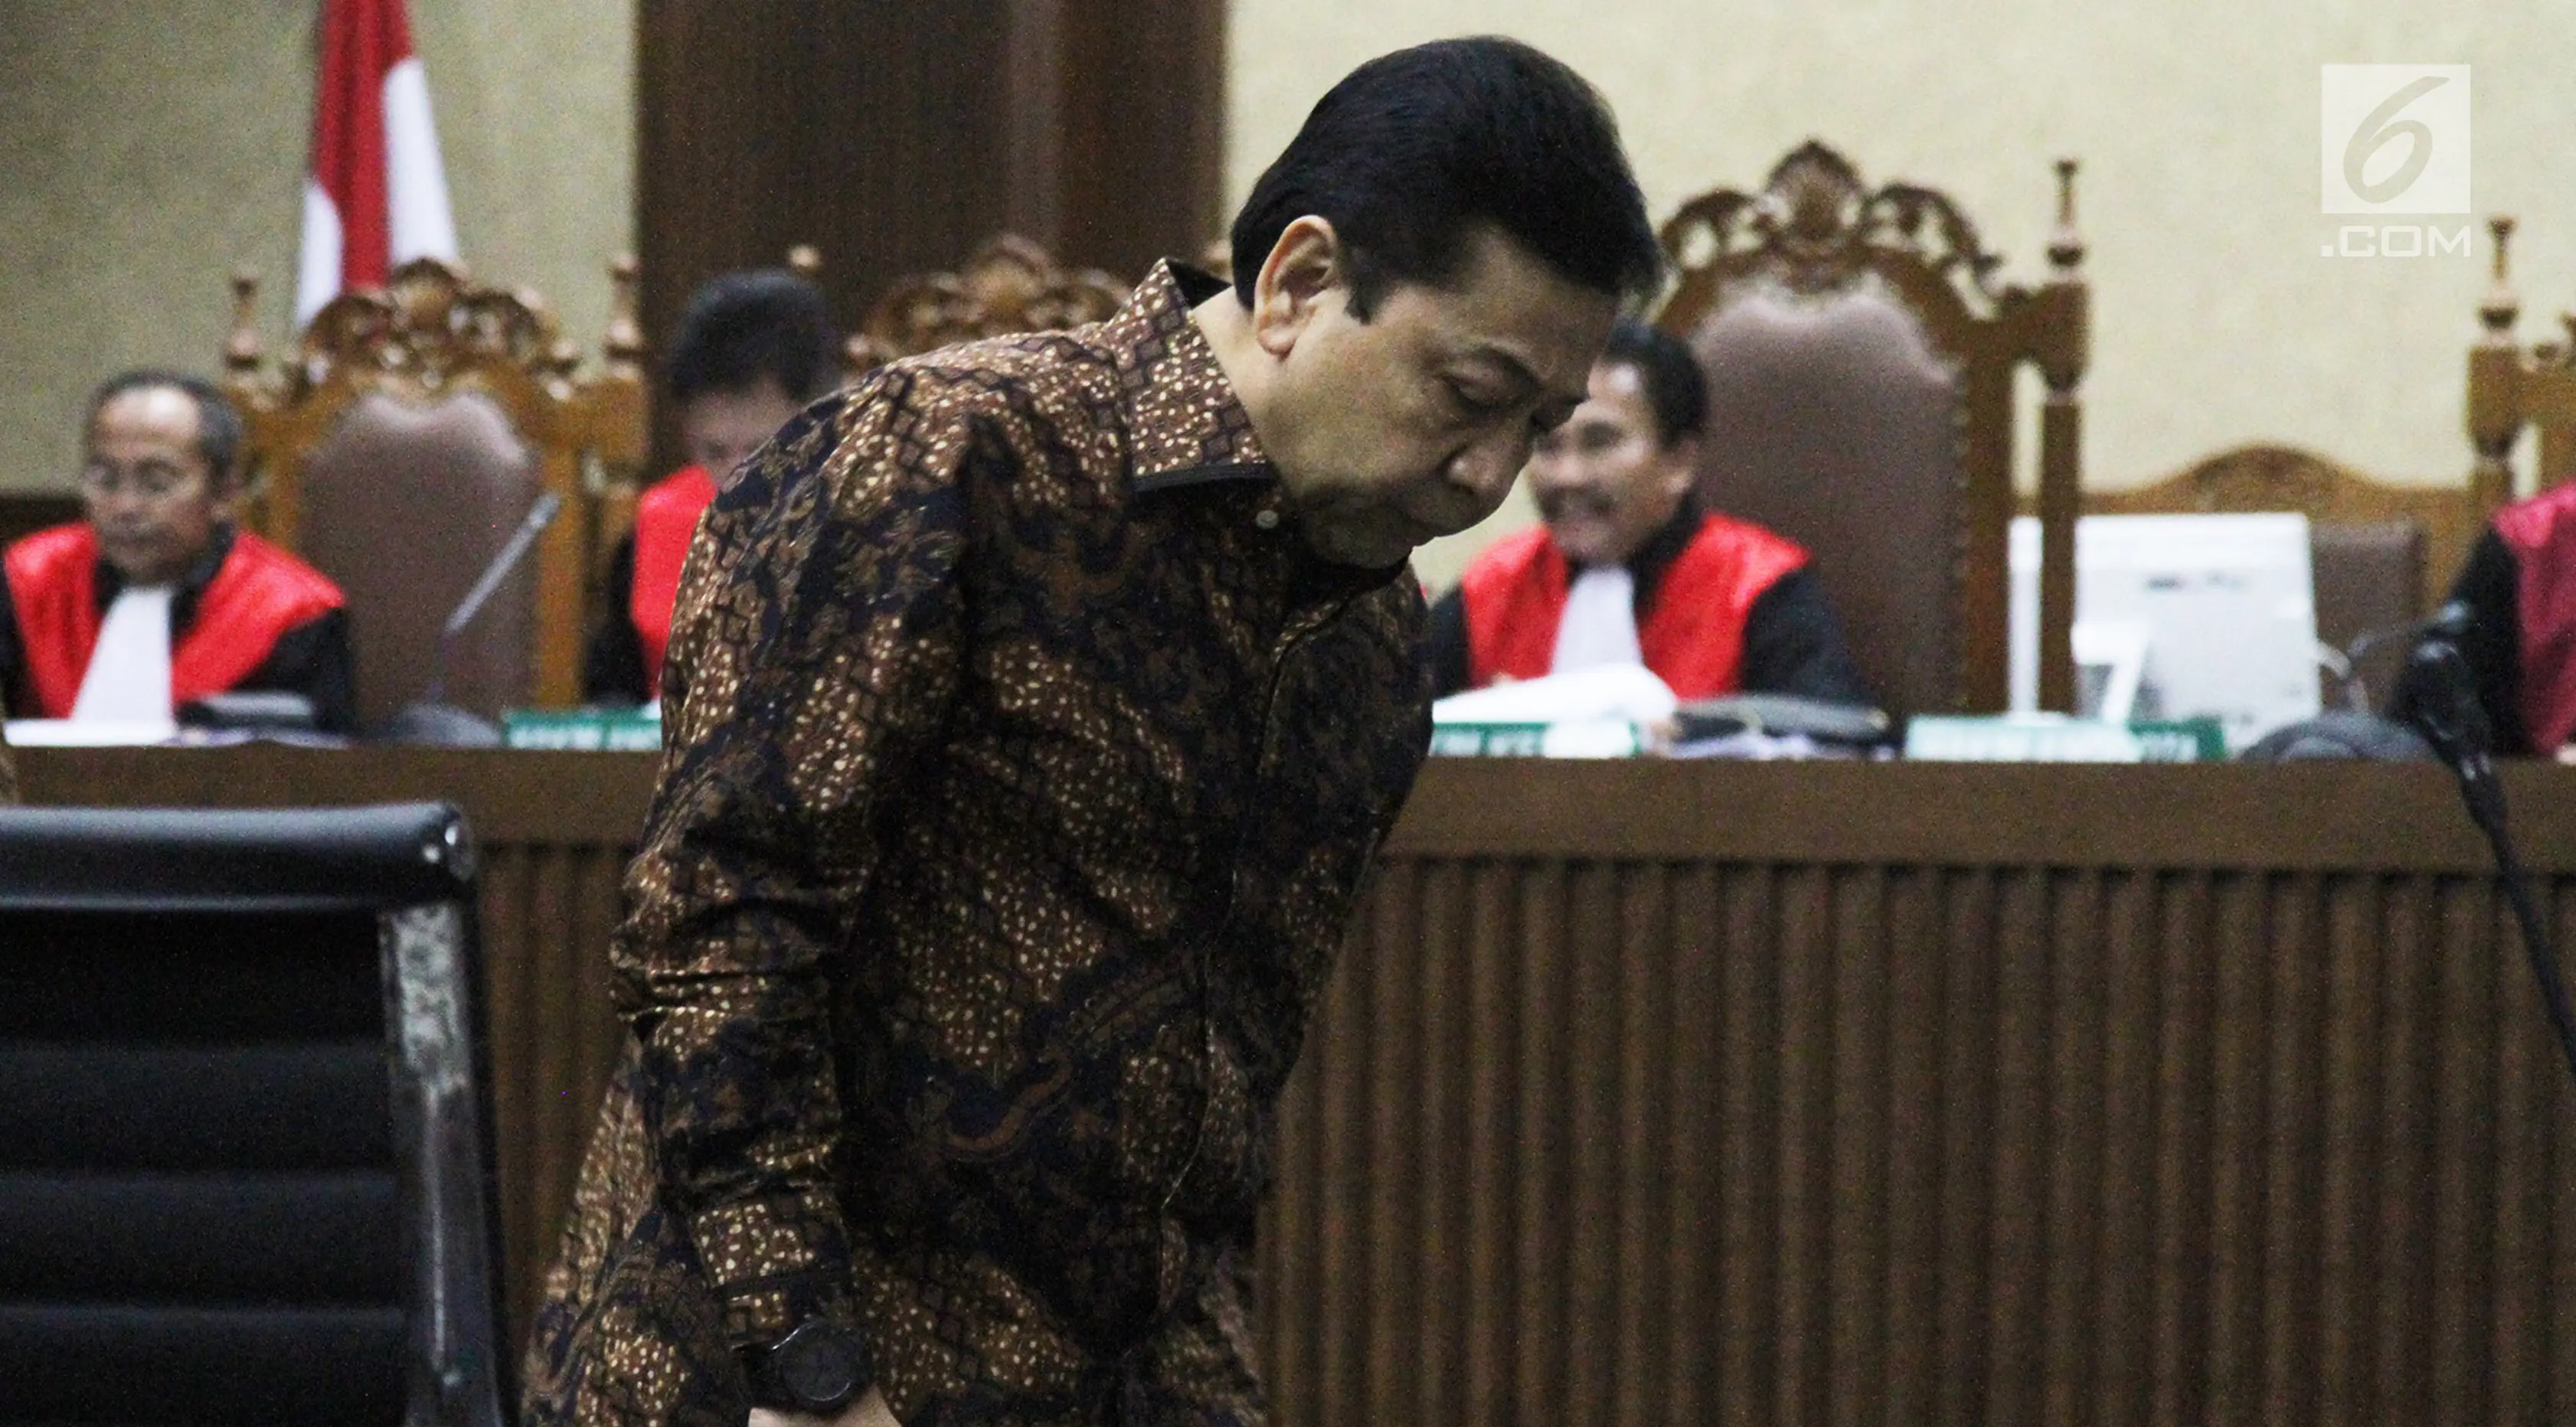 Ketua DPR Setya Novanto saat menghadiri sidang kasus korupsi e-KTP di Pengadilan Tipikor Jakarta, Jumat (3/11). Dalam sidang tersebut, beberapa kali Setnov mengaku lupa saat ditanya hakim maupun jaksa penuntut umum. (Liputan6.com/Helmi Afandi)